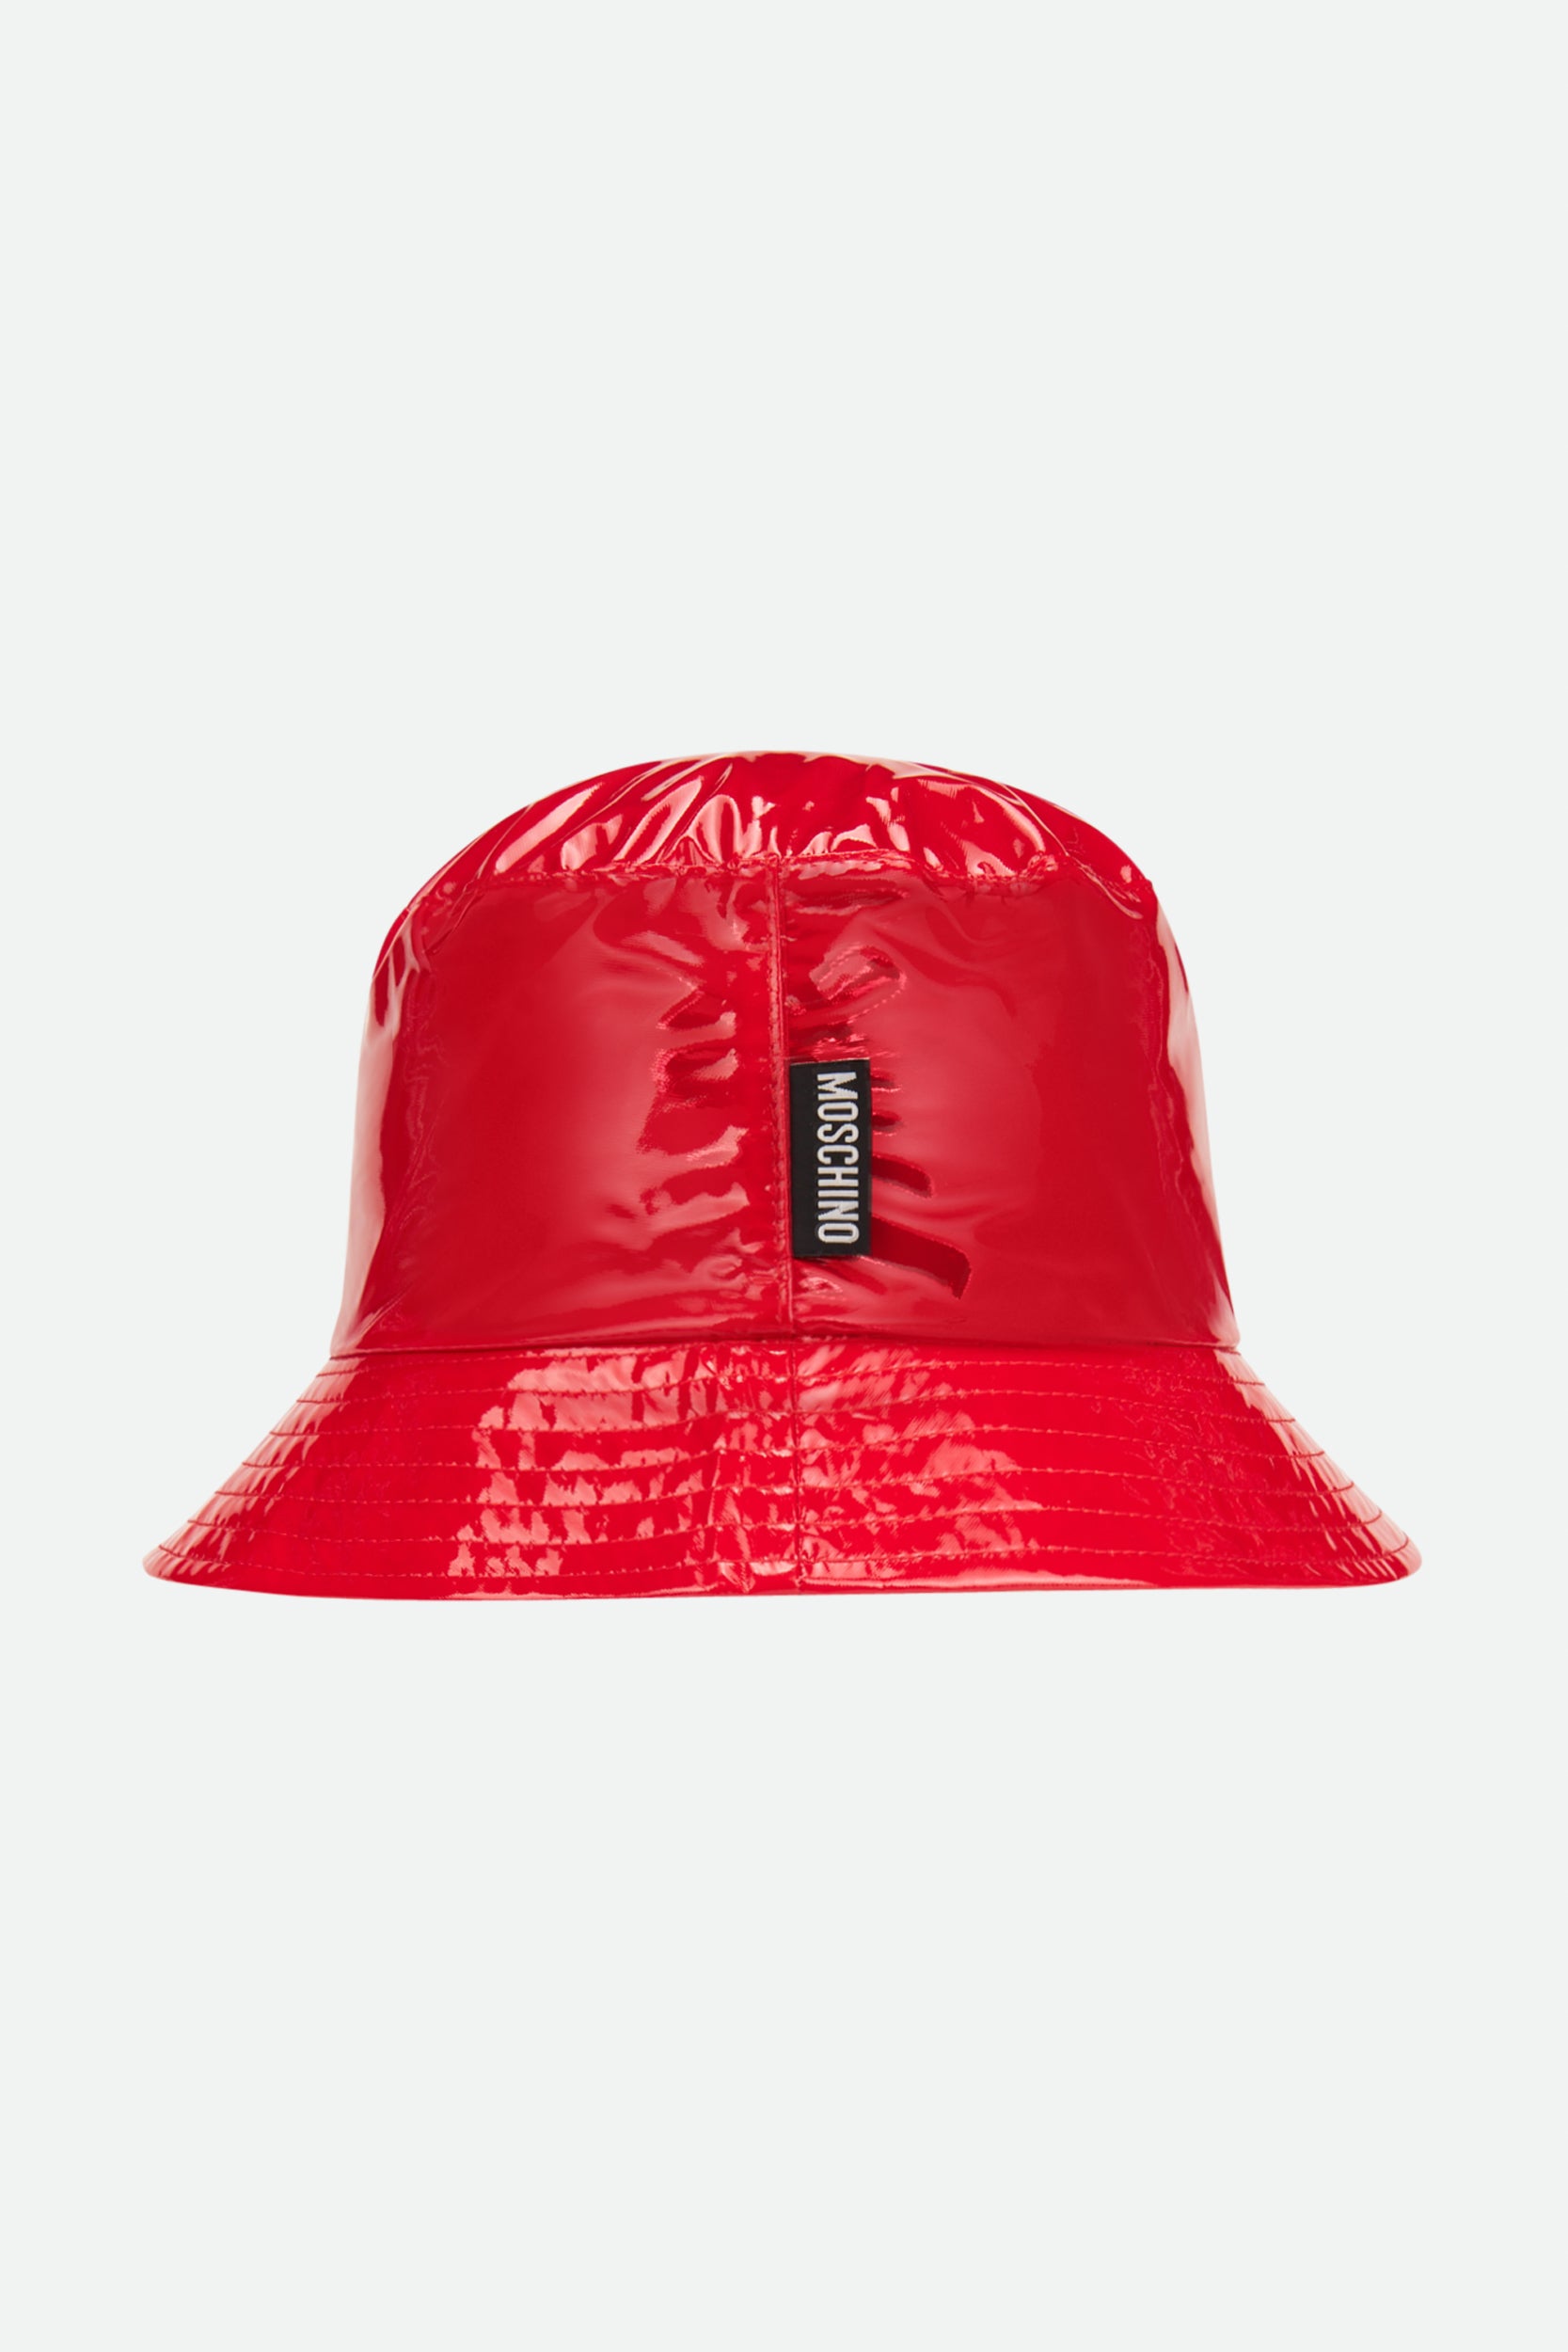 Moschino-Hut aus rotem Vinyl